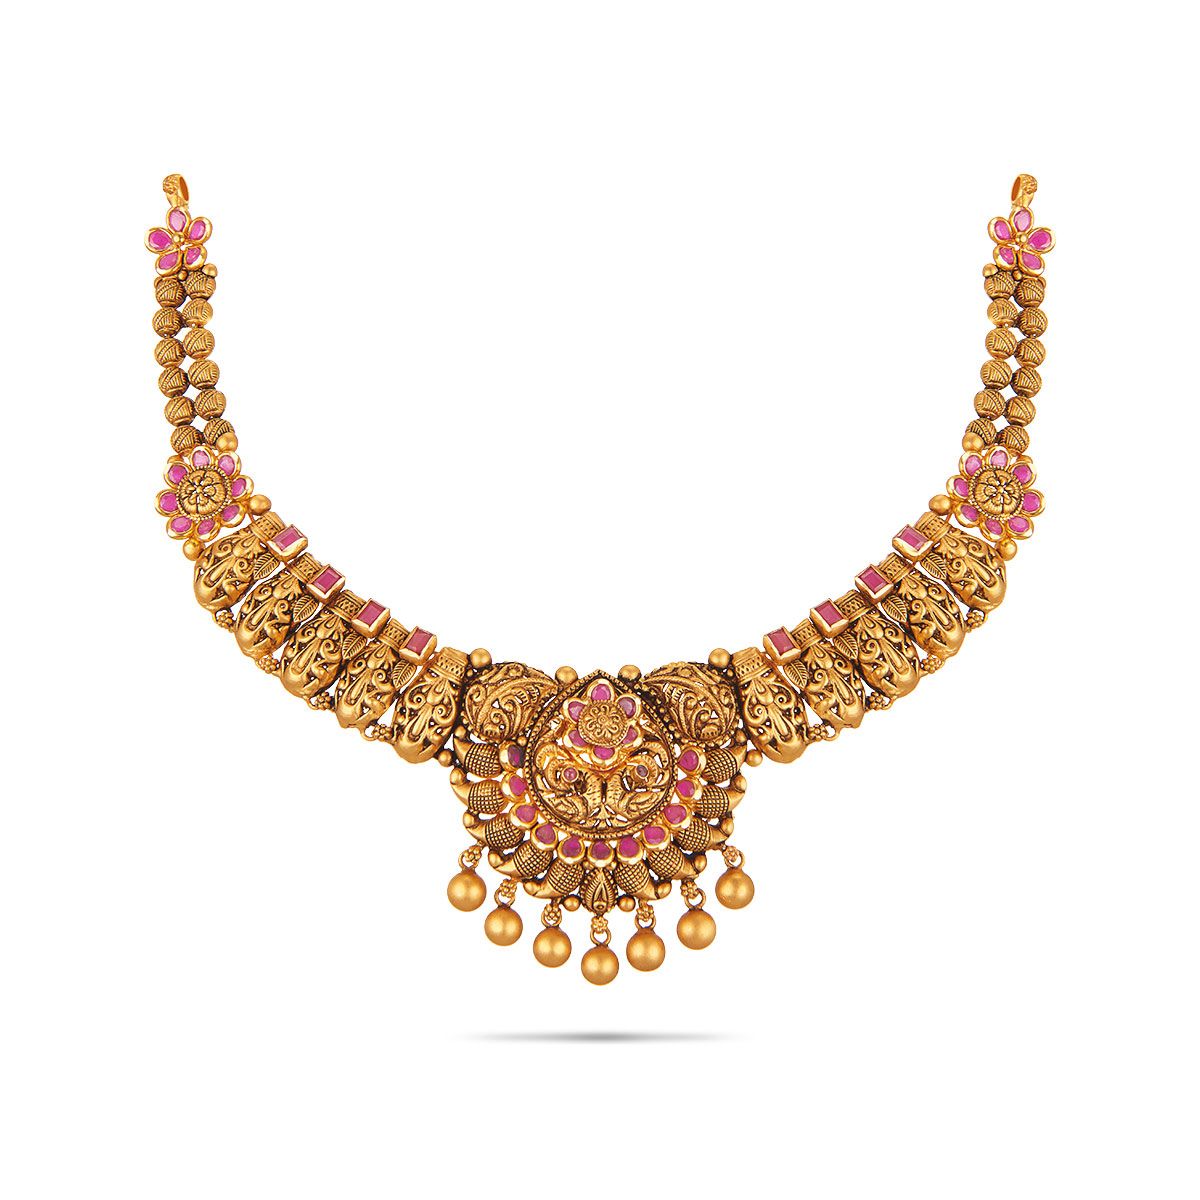 Royal Antique Peacock Gold Necklace